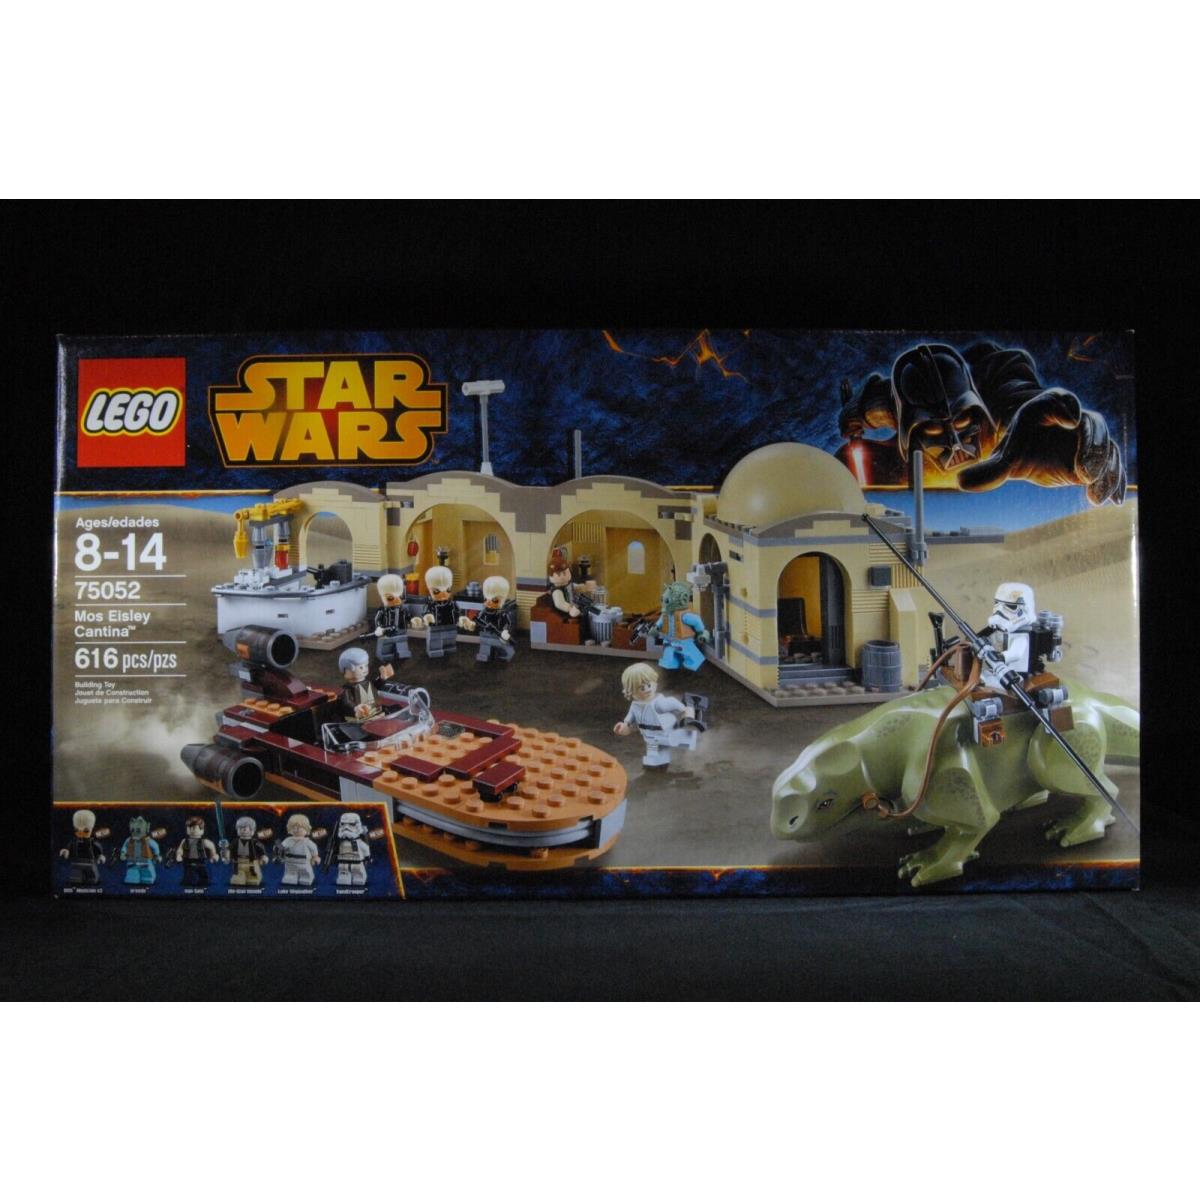 Lego Star Wars Mos Eisley Cantina 75052 Retired